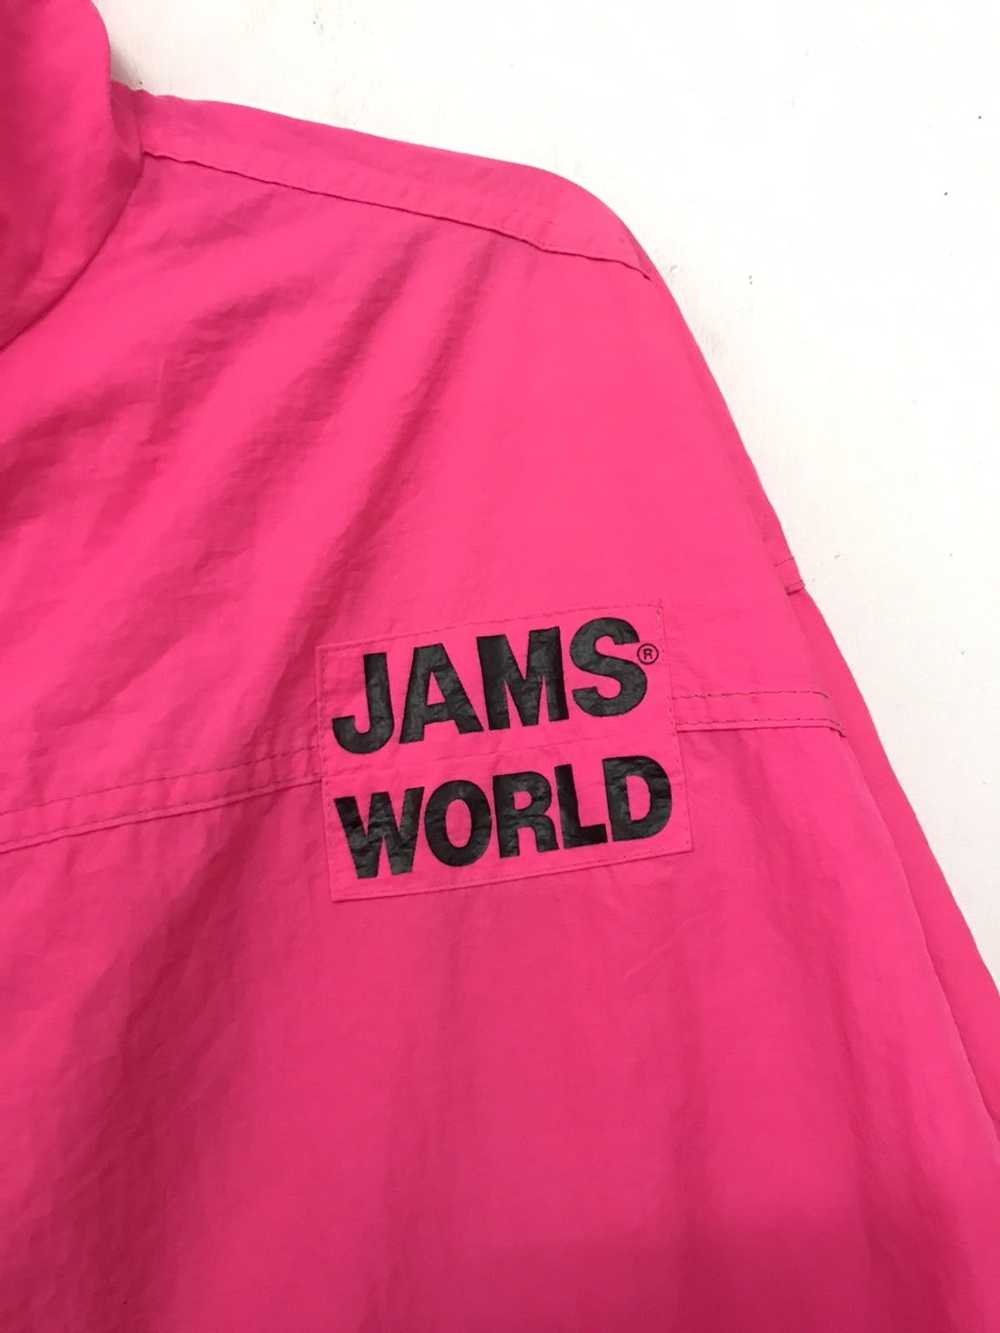 Jams World Jams World Light Jacket / Windbreaker - image 4